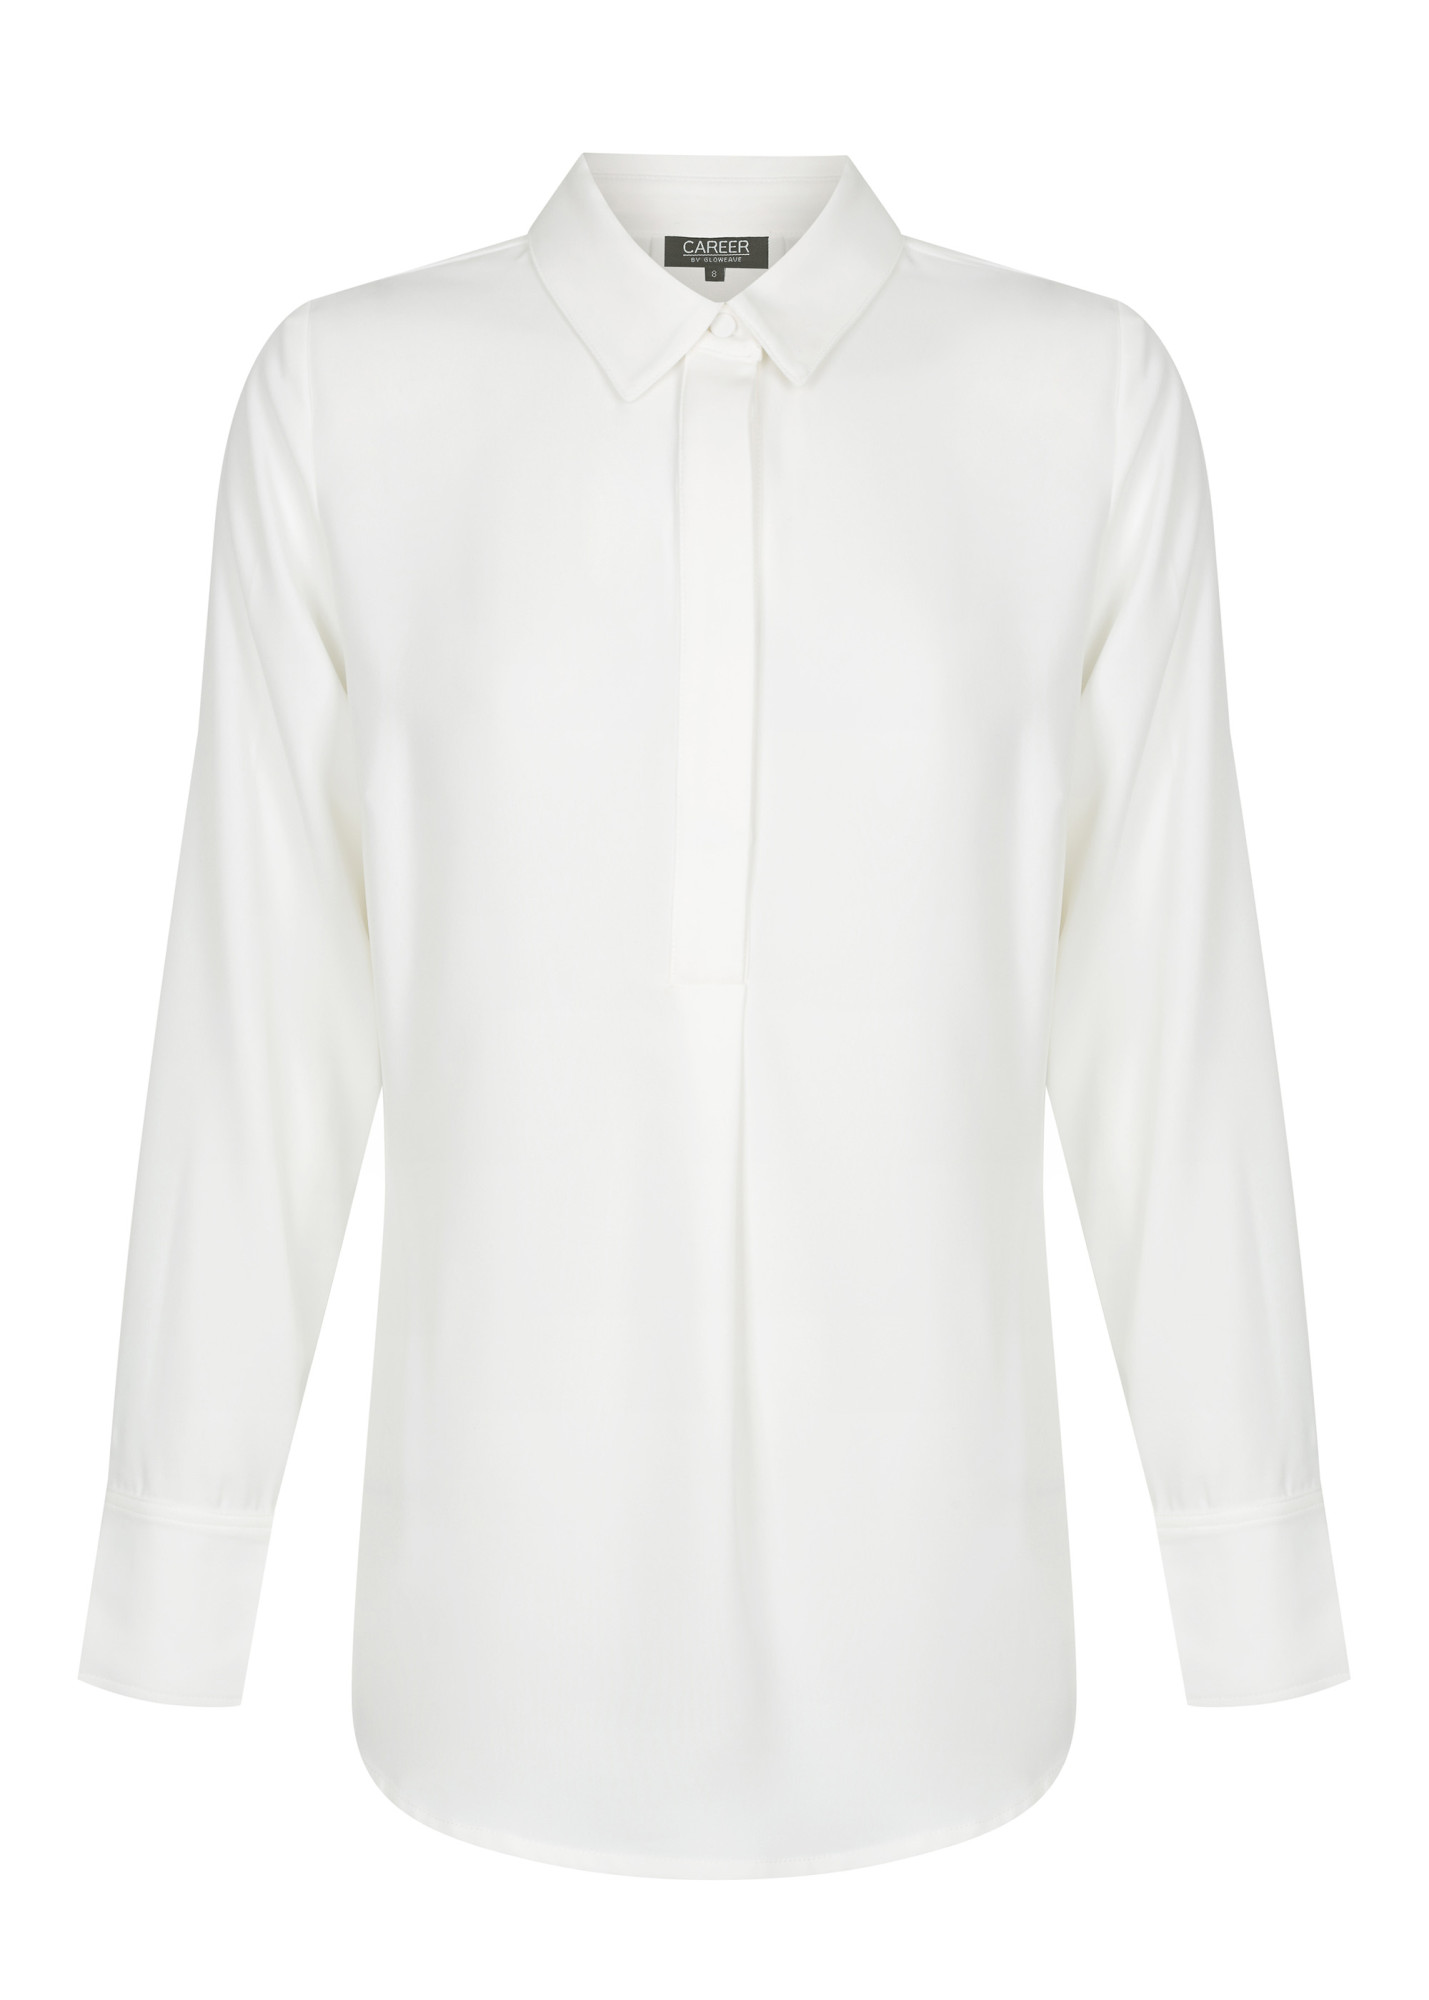 Quinn Blouse - Long Sleeve Soft Top Ivory - Uniform Edit